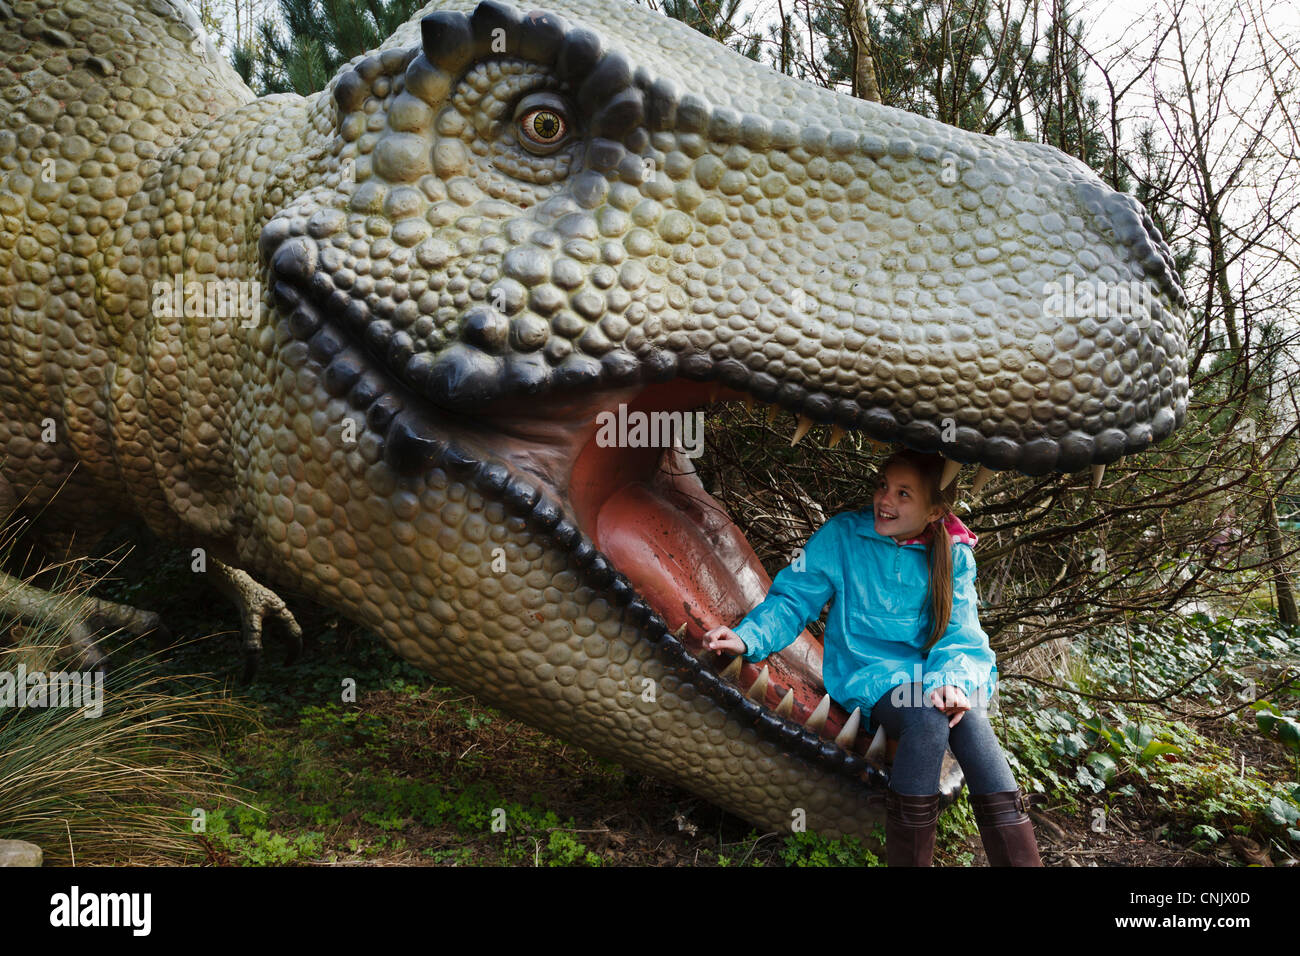 Girl sitting in the mouth of Tyrannosaurus rex in the Dinosaur Safari at Blackpool Zoo Stock Photo